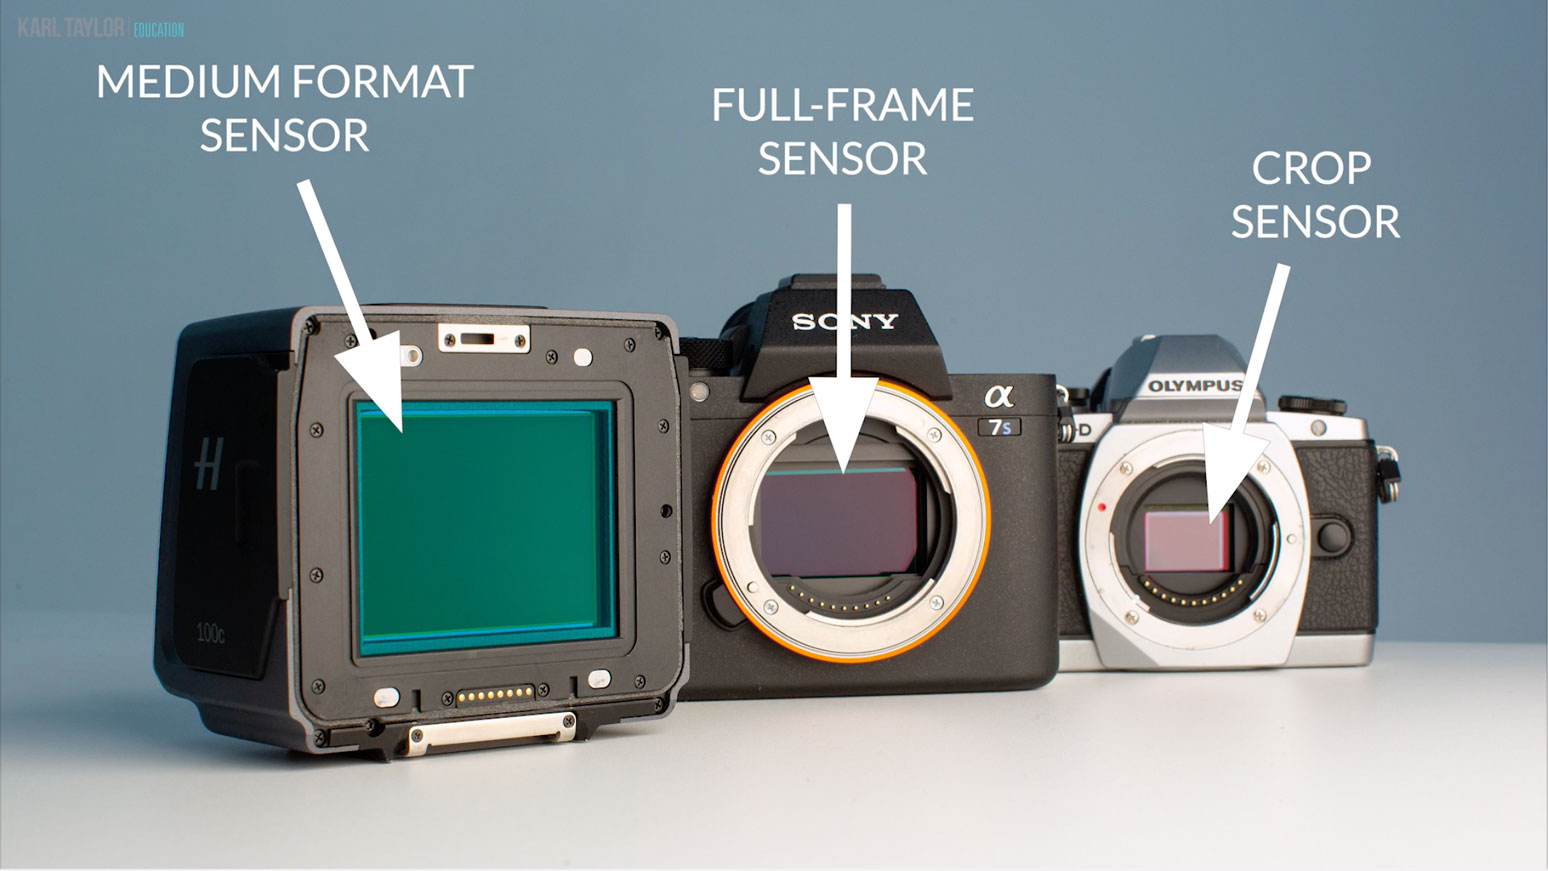 Camera sensors medium format full-frame and crop sensor